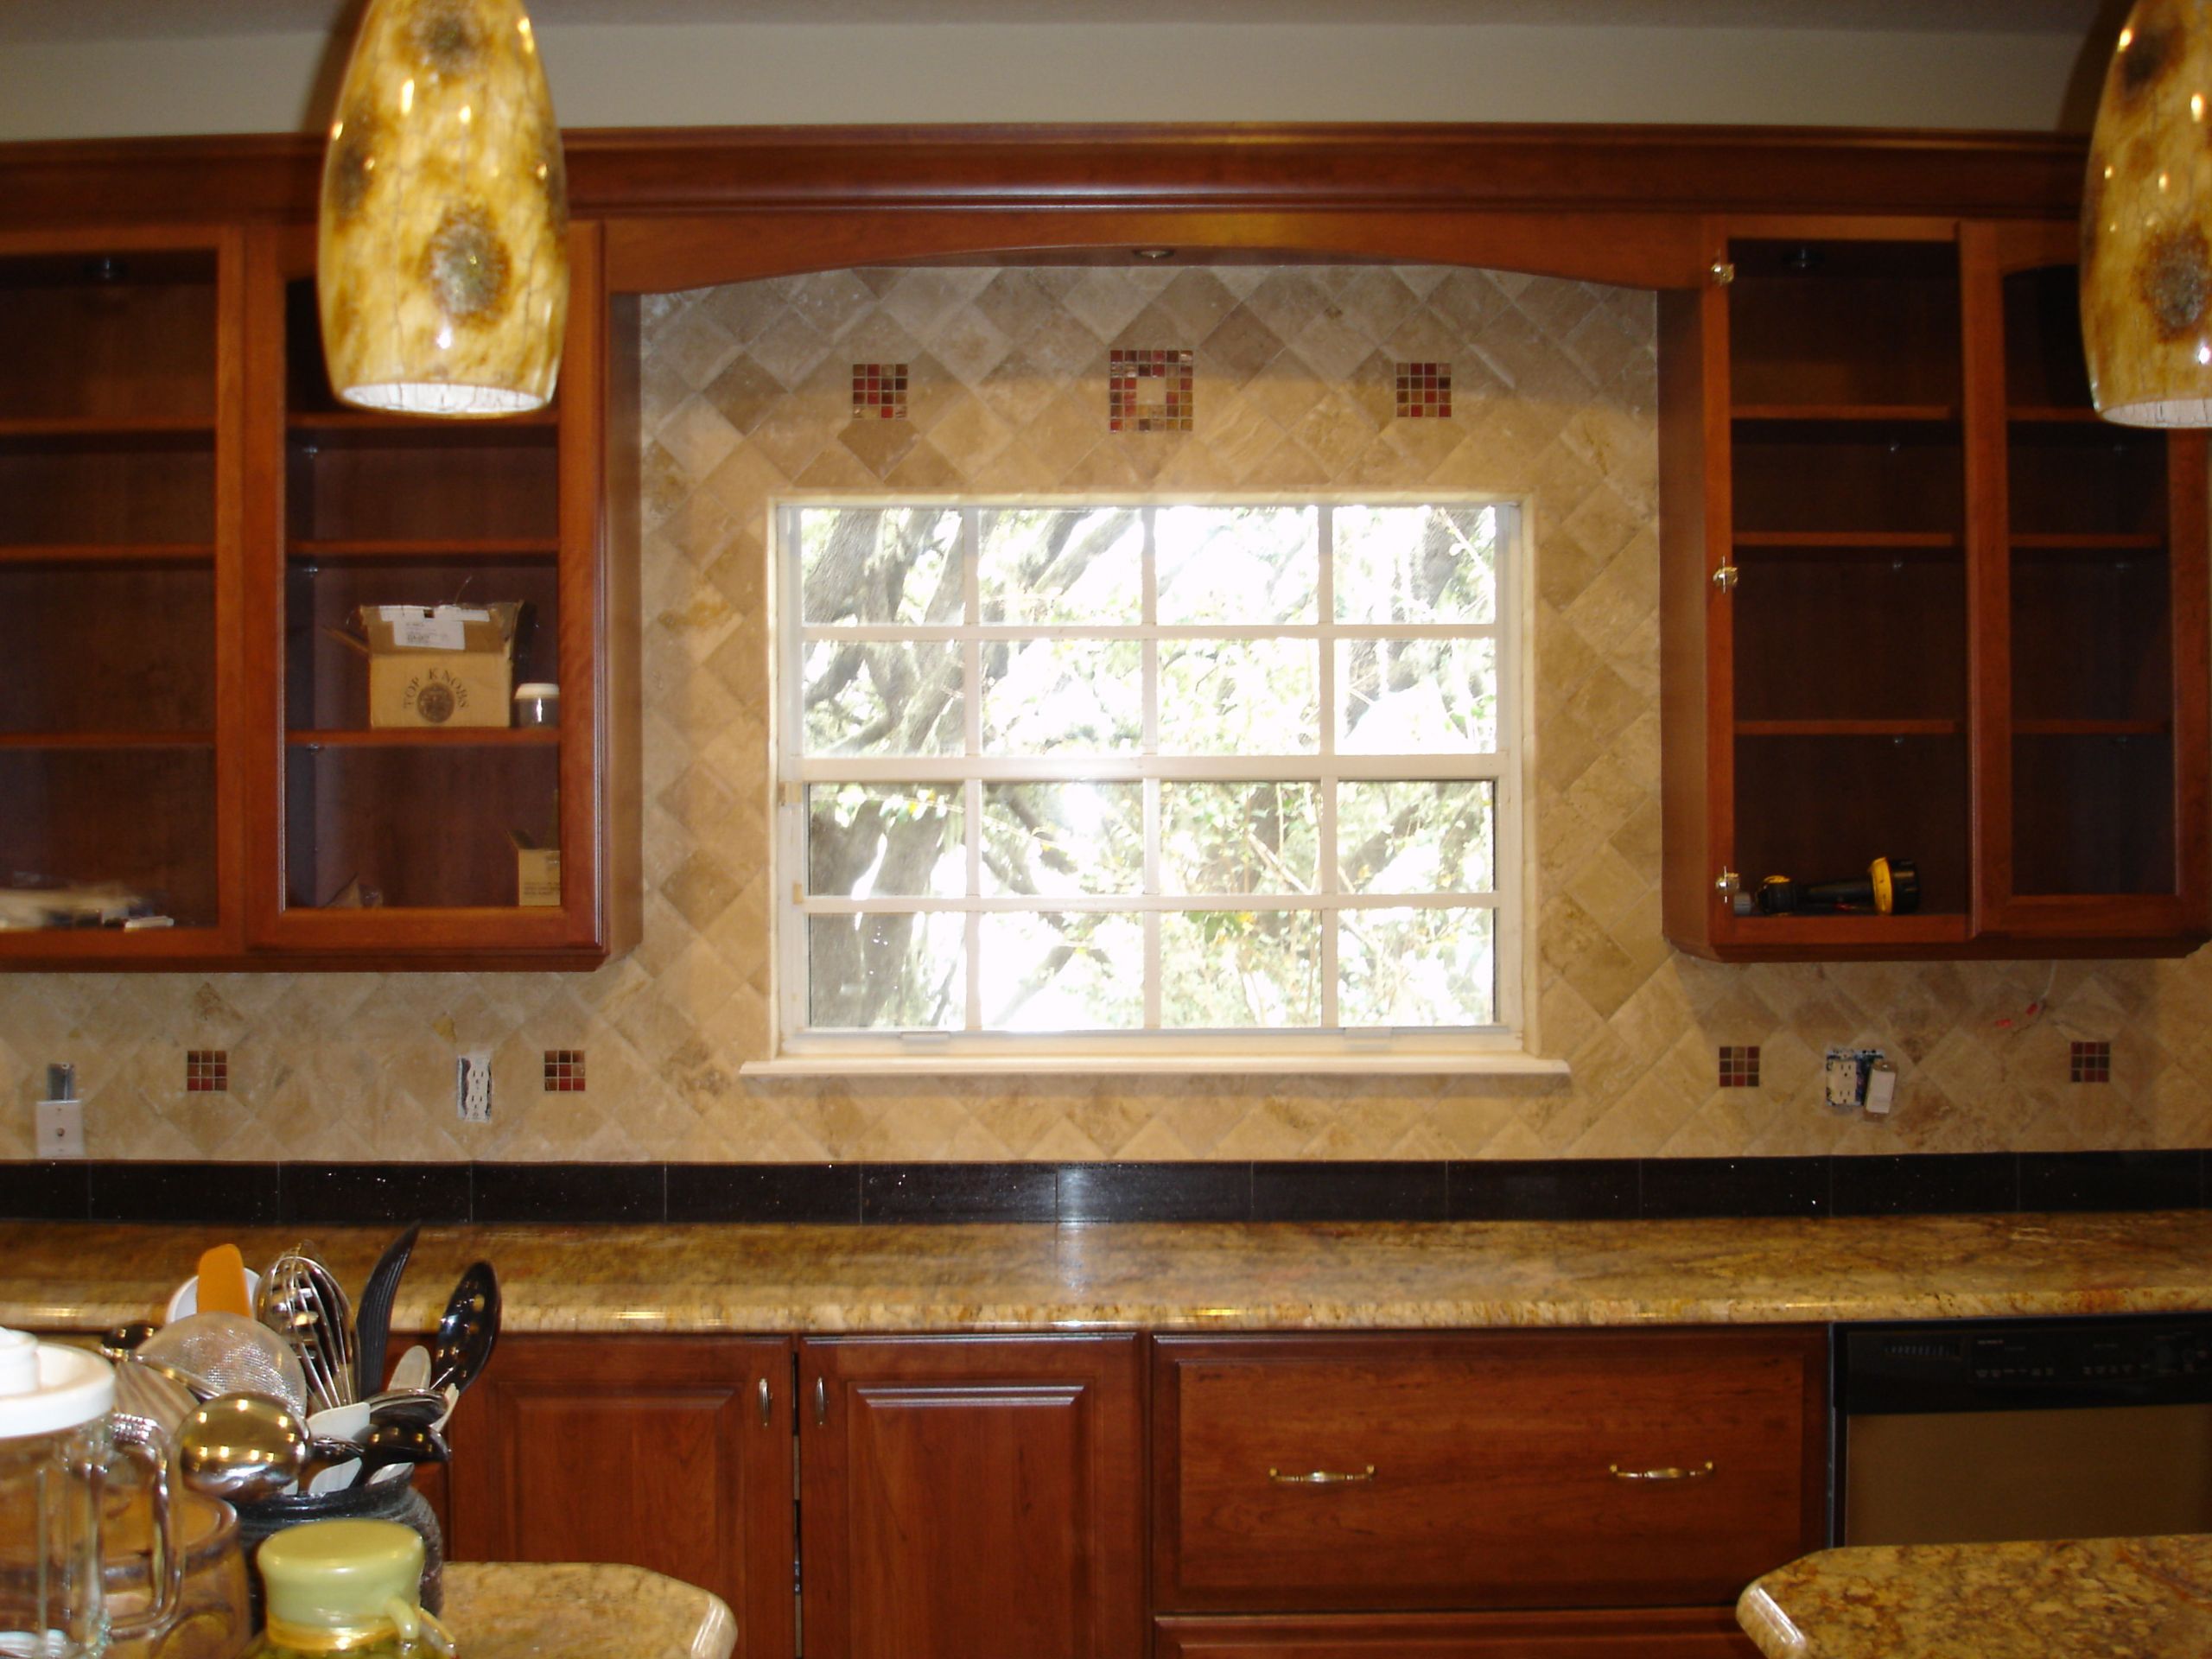 Tile Inserts For Kitchen Backsplash
 Travertine backsplash with decorative glass inserts